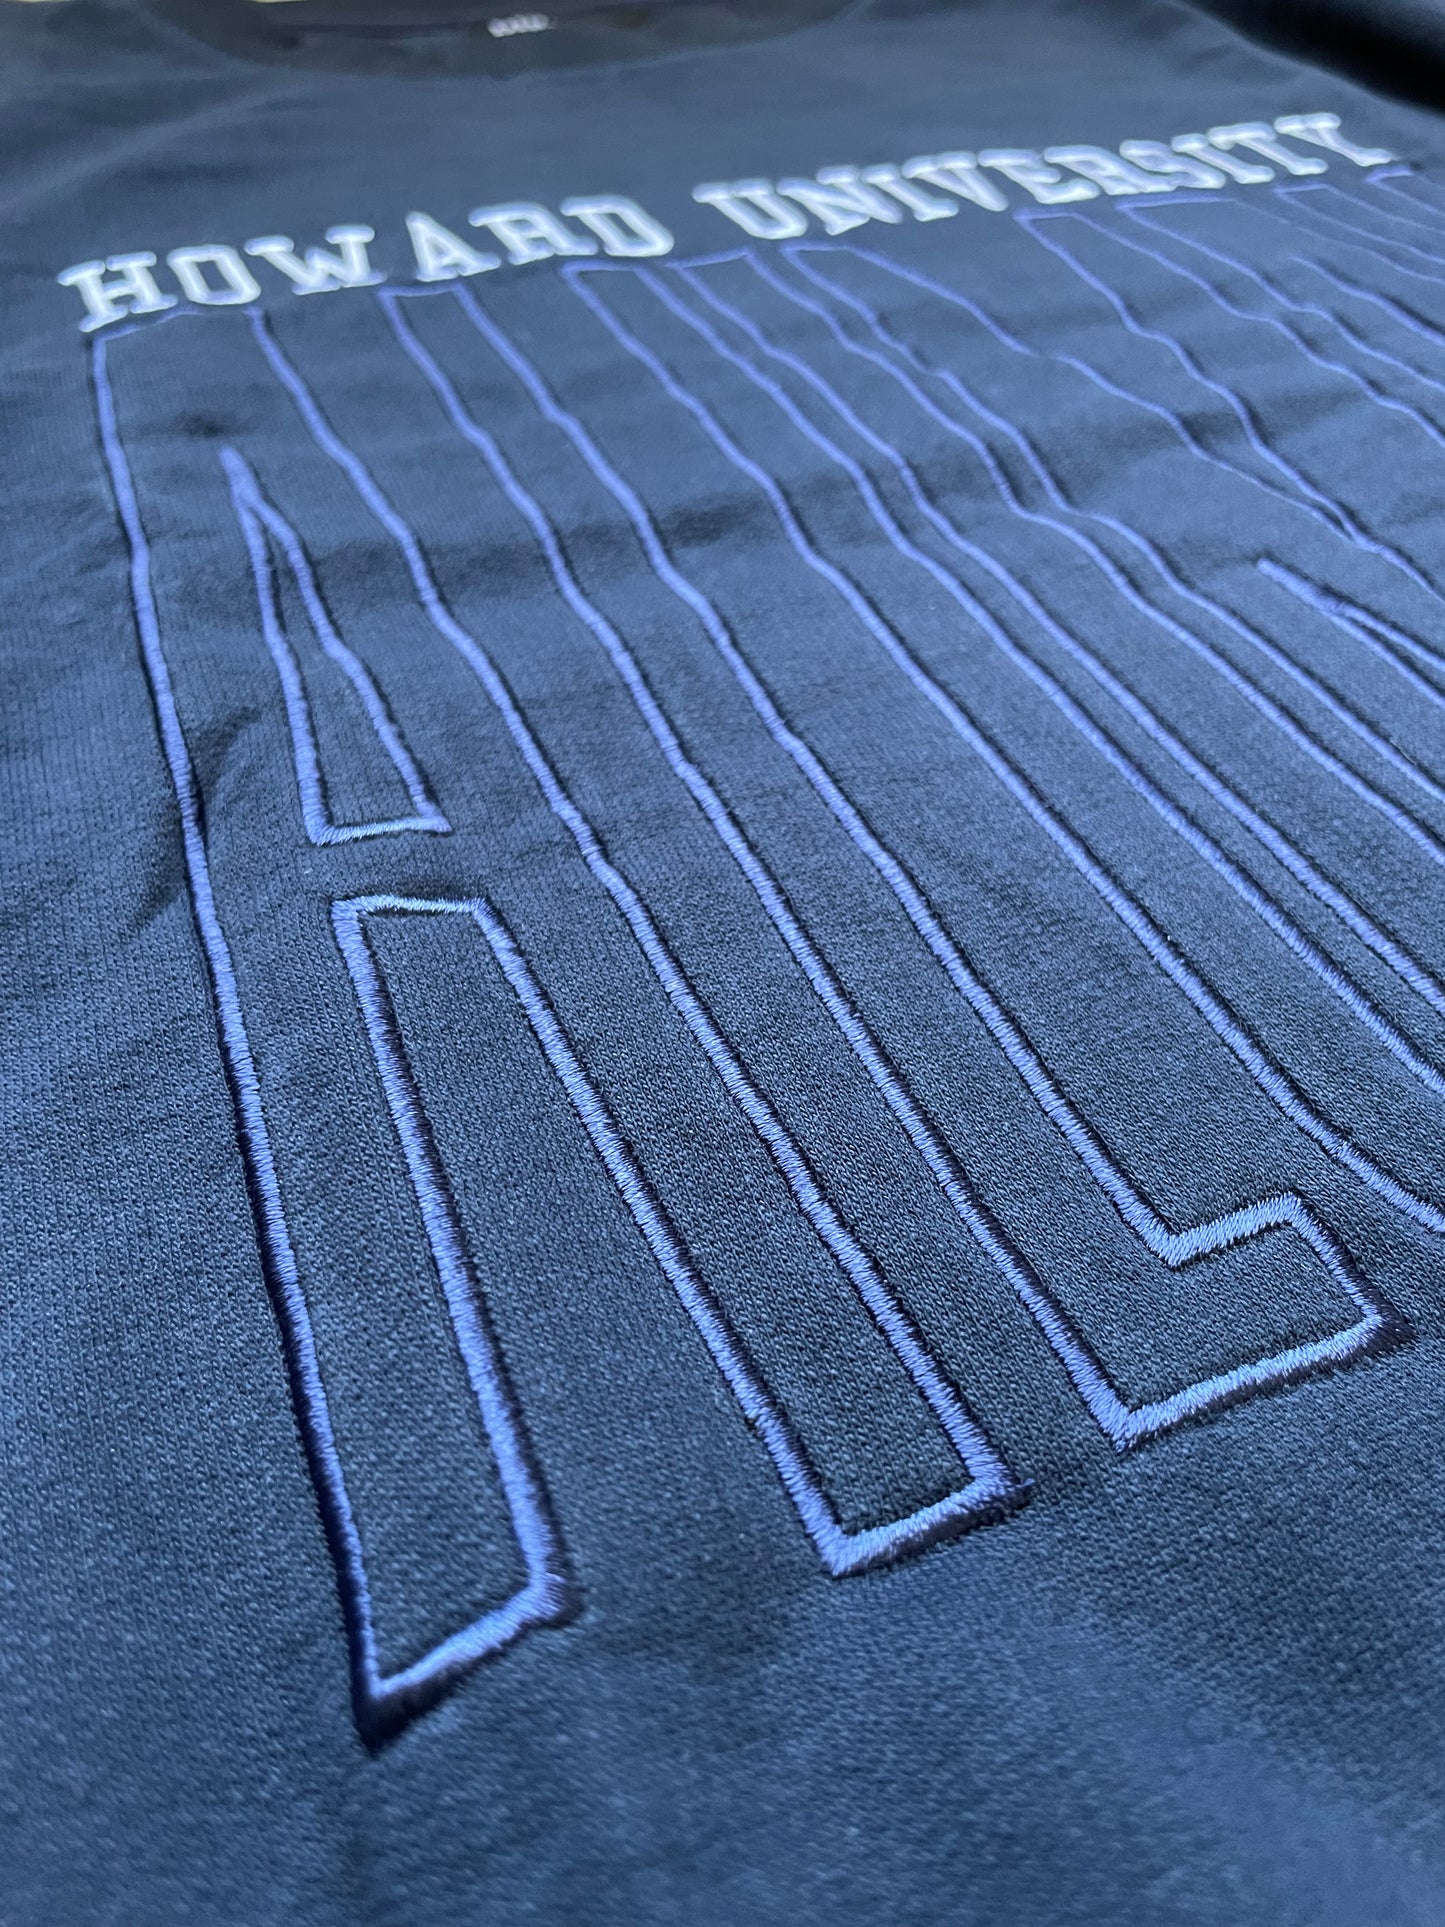 Howard University™ ALUMNI Large Embroidered Sweatshirt